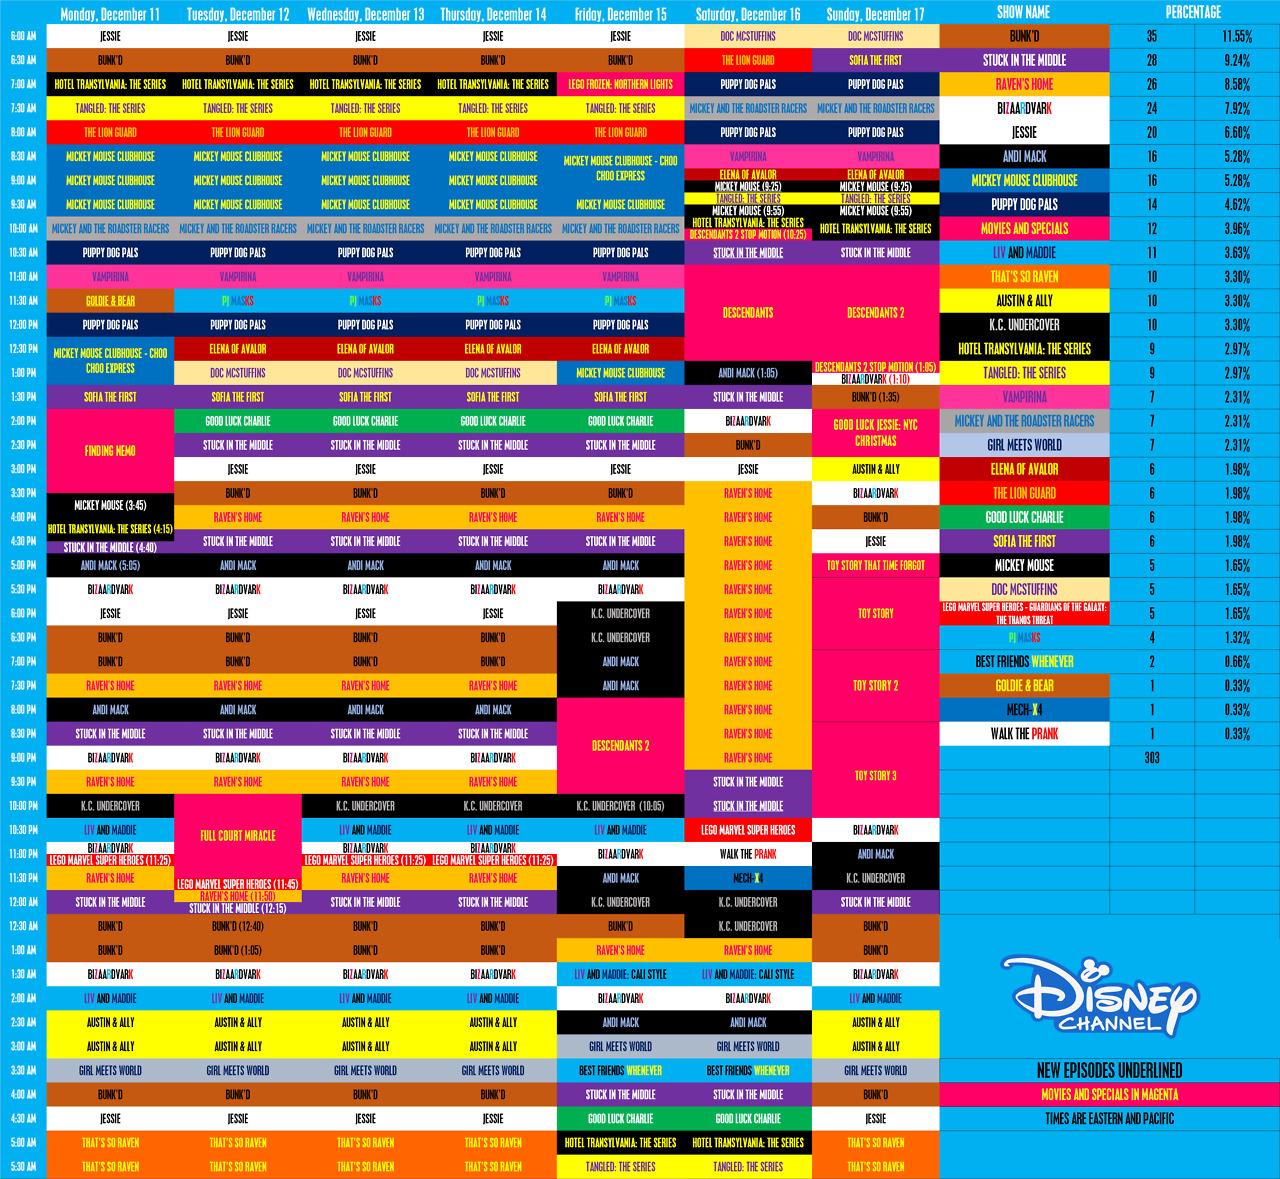 Disney Schedule Archive: Photo